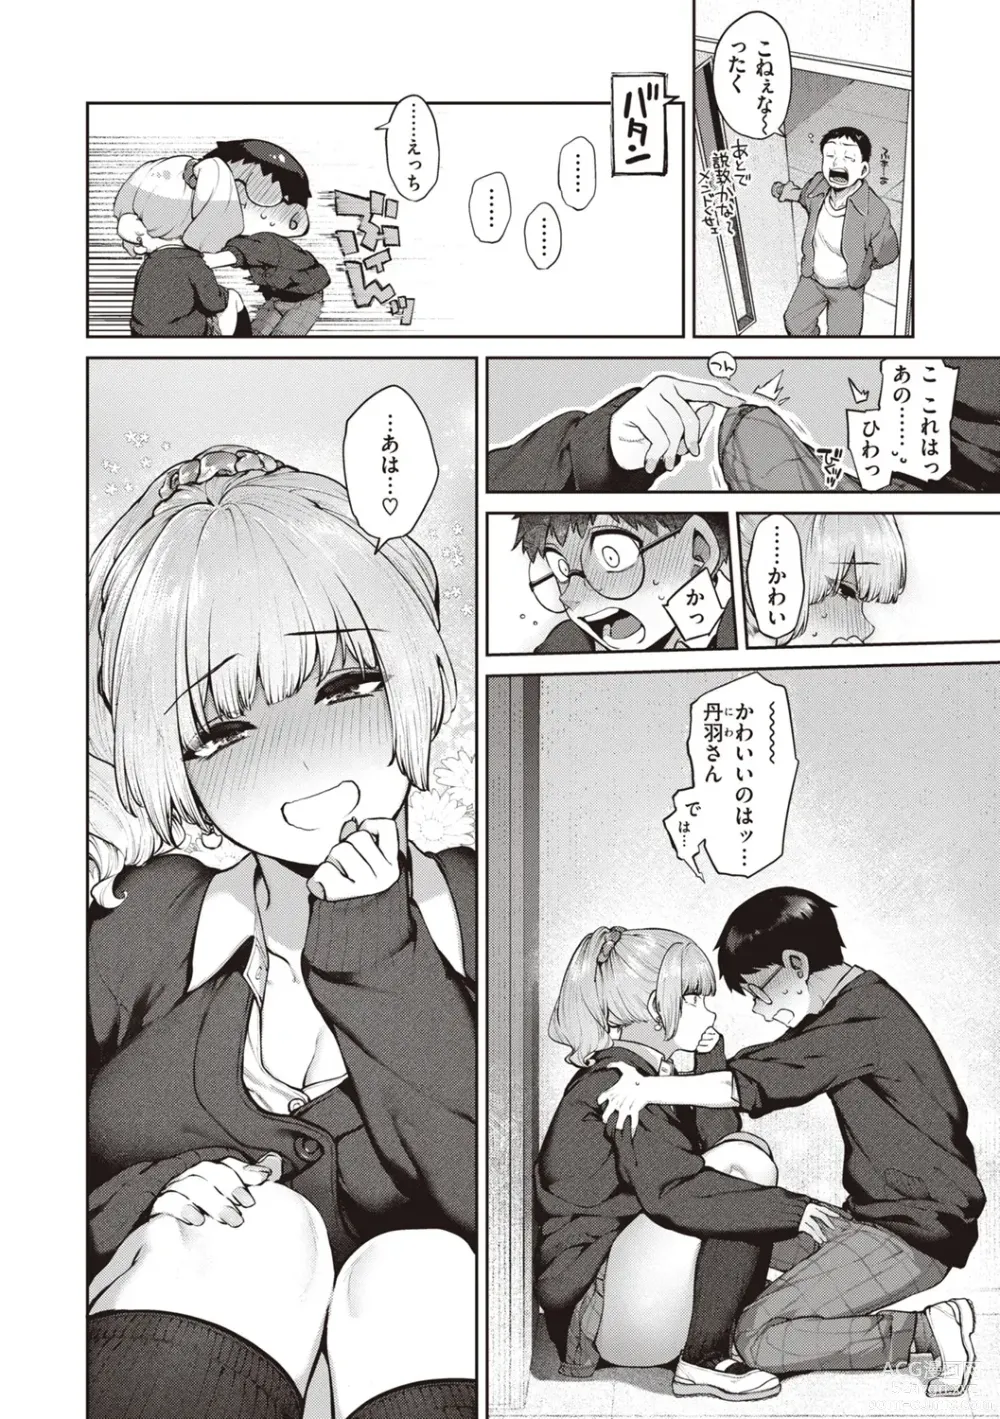 Page 12 of manga DA-DA-MO-RE